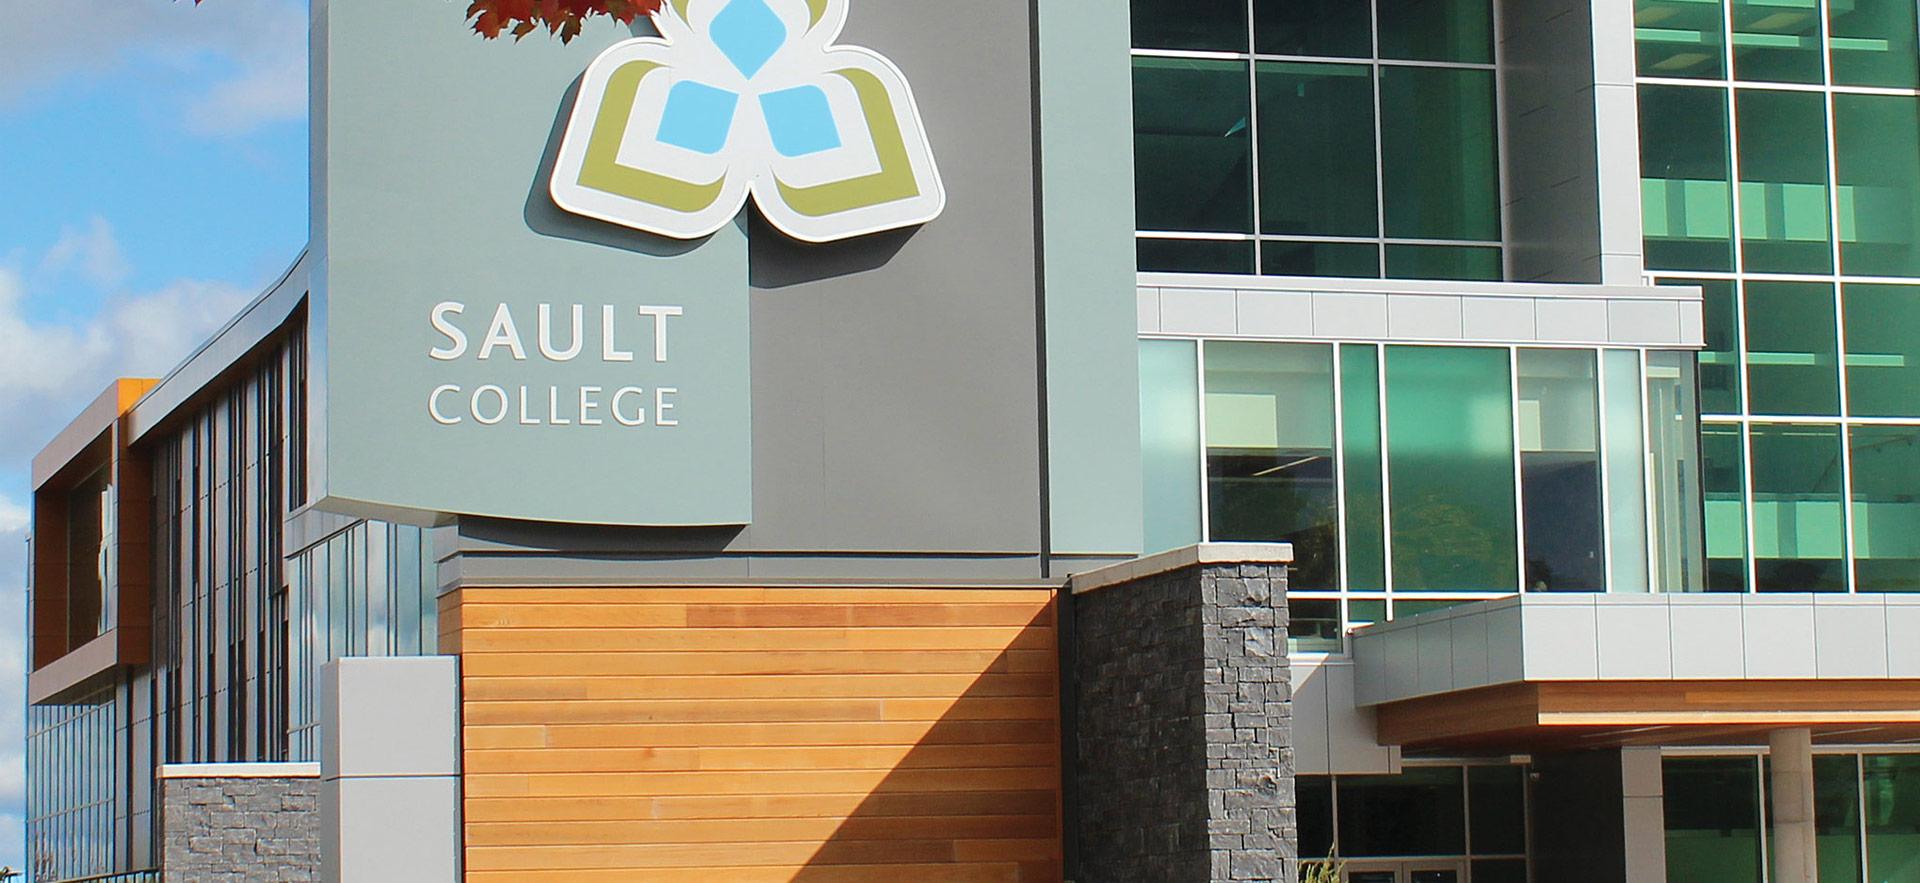 Sault College campus exterior entrance